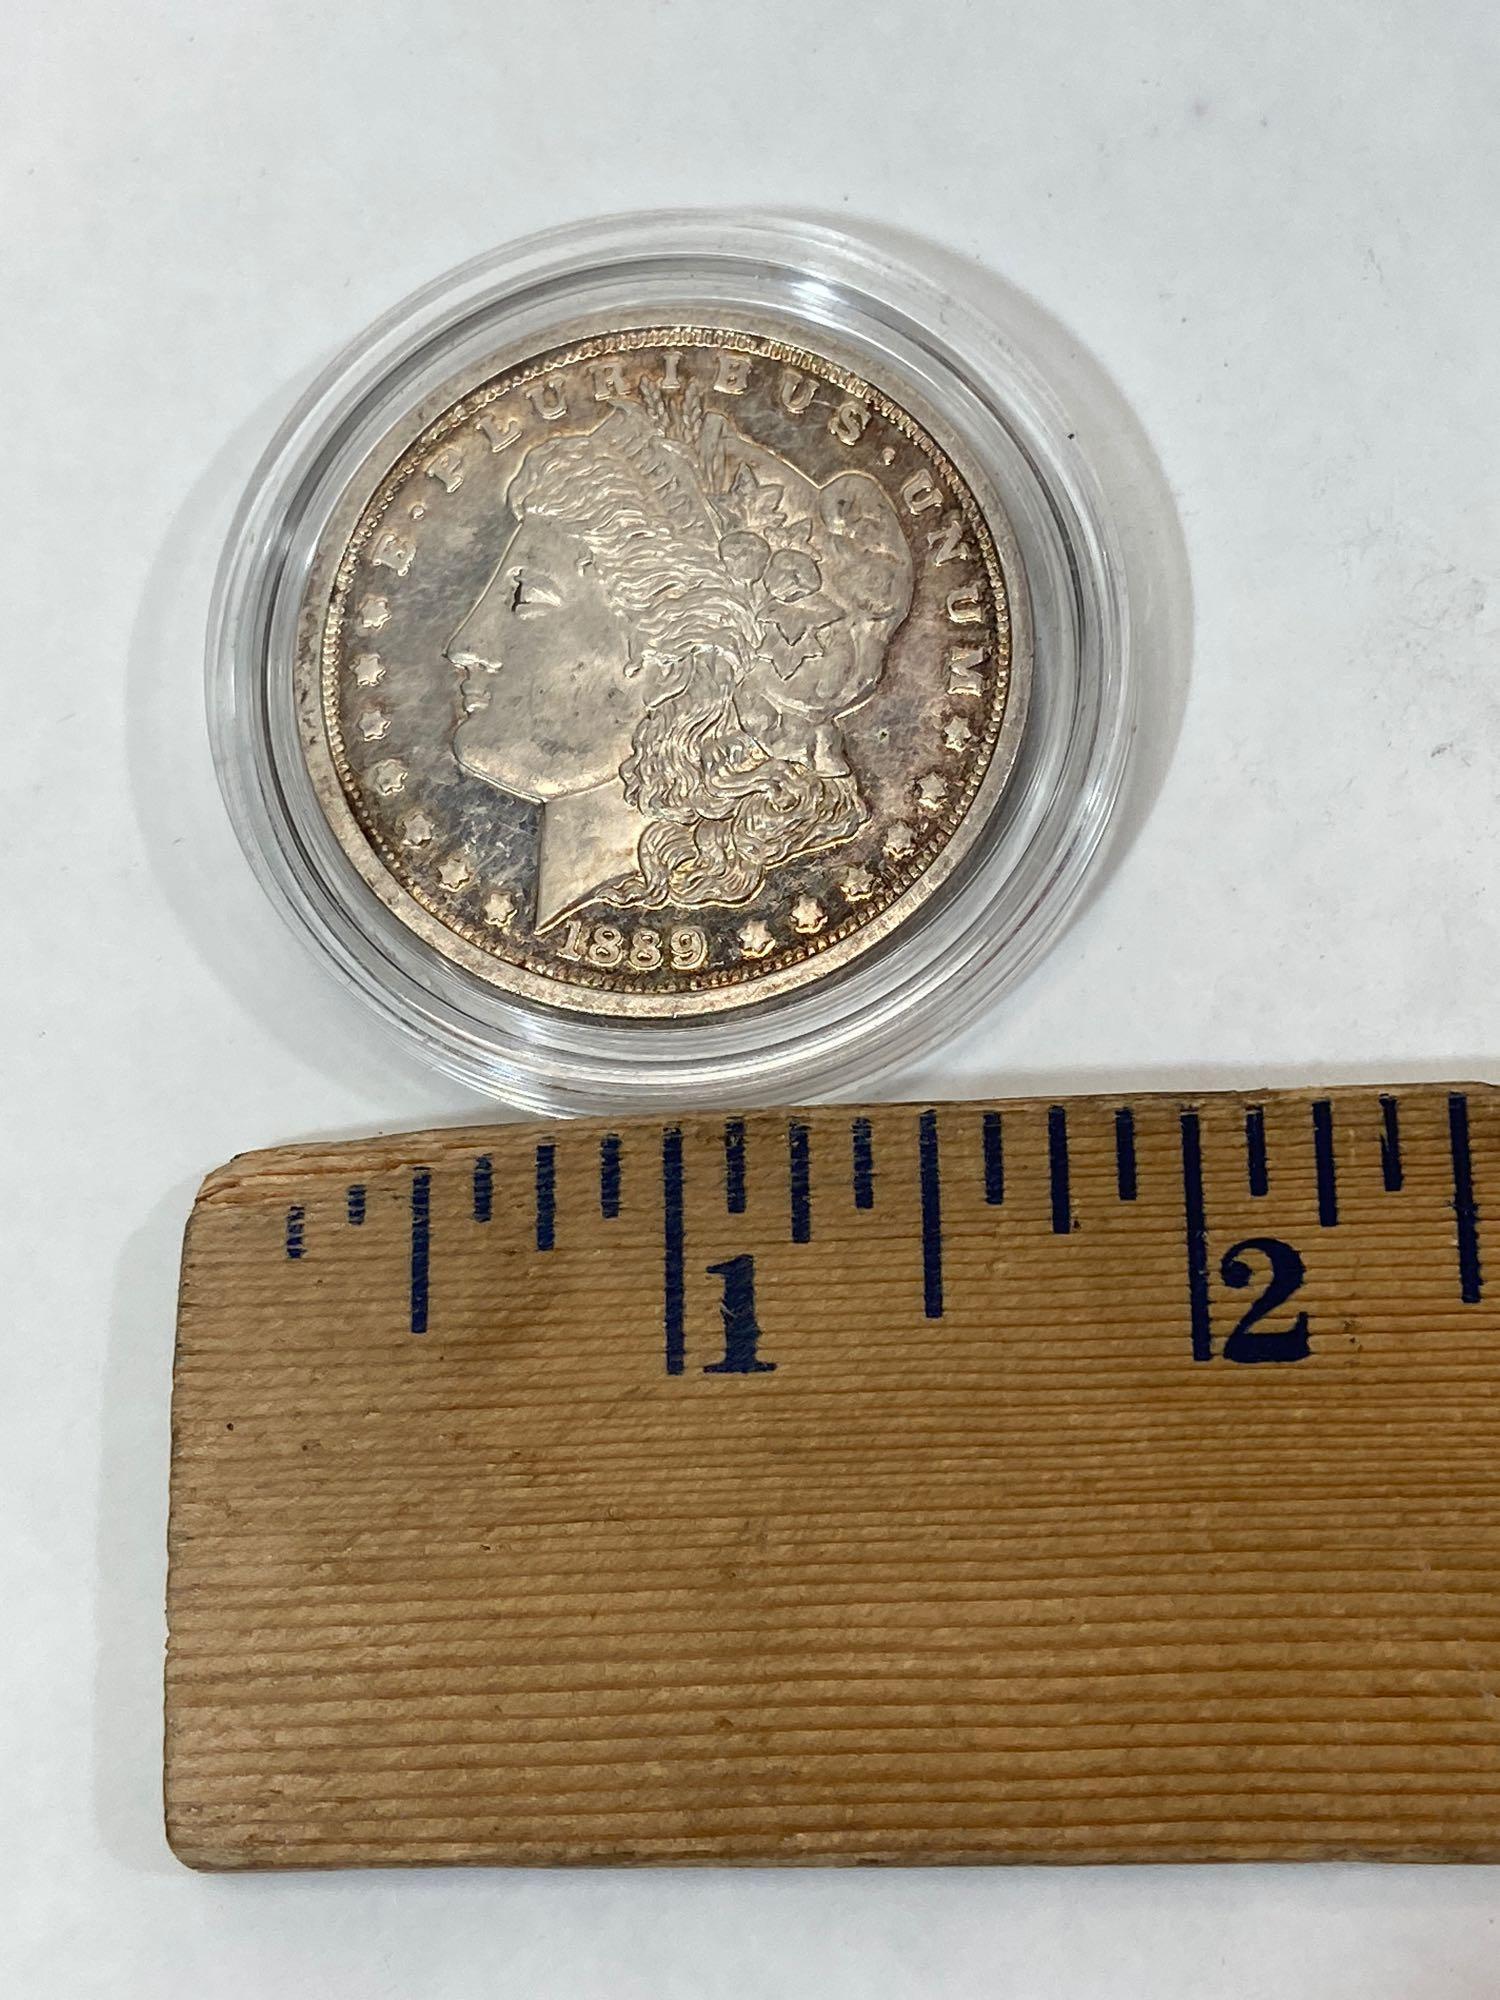 1889 Morgan Dollar, United States silver dollar coin